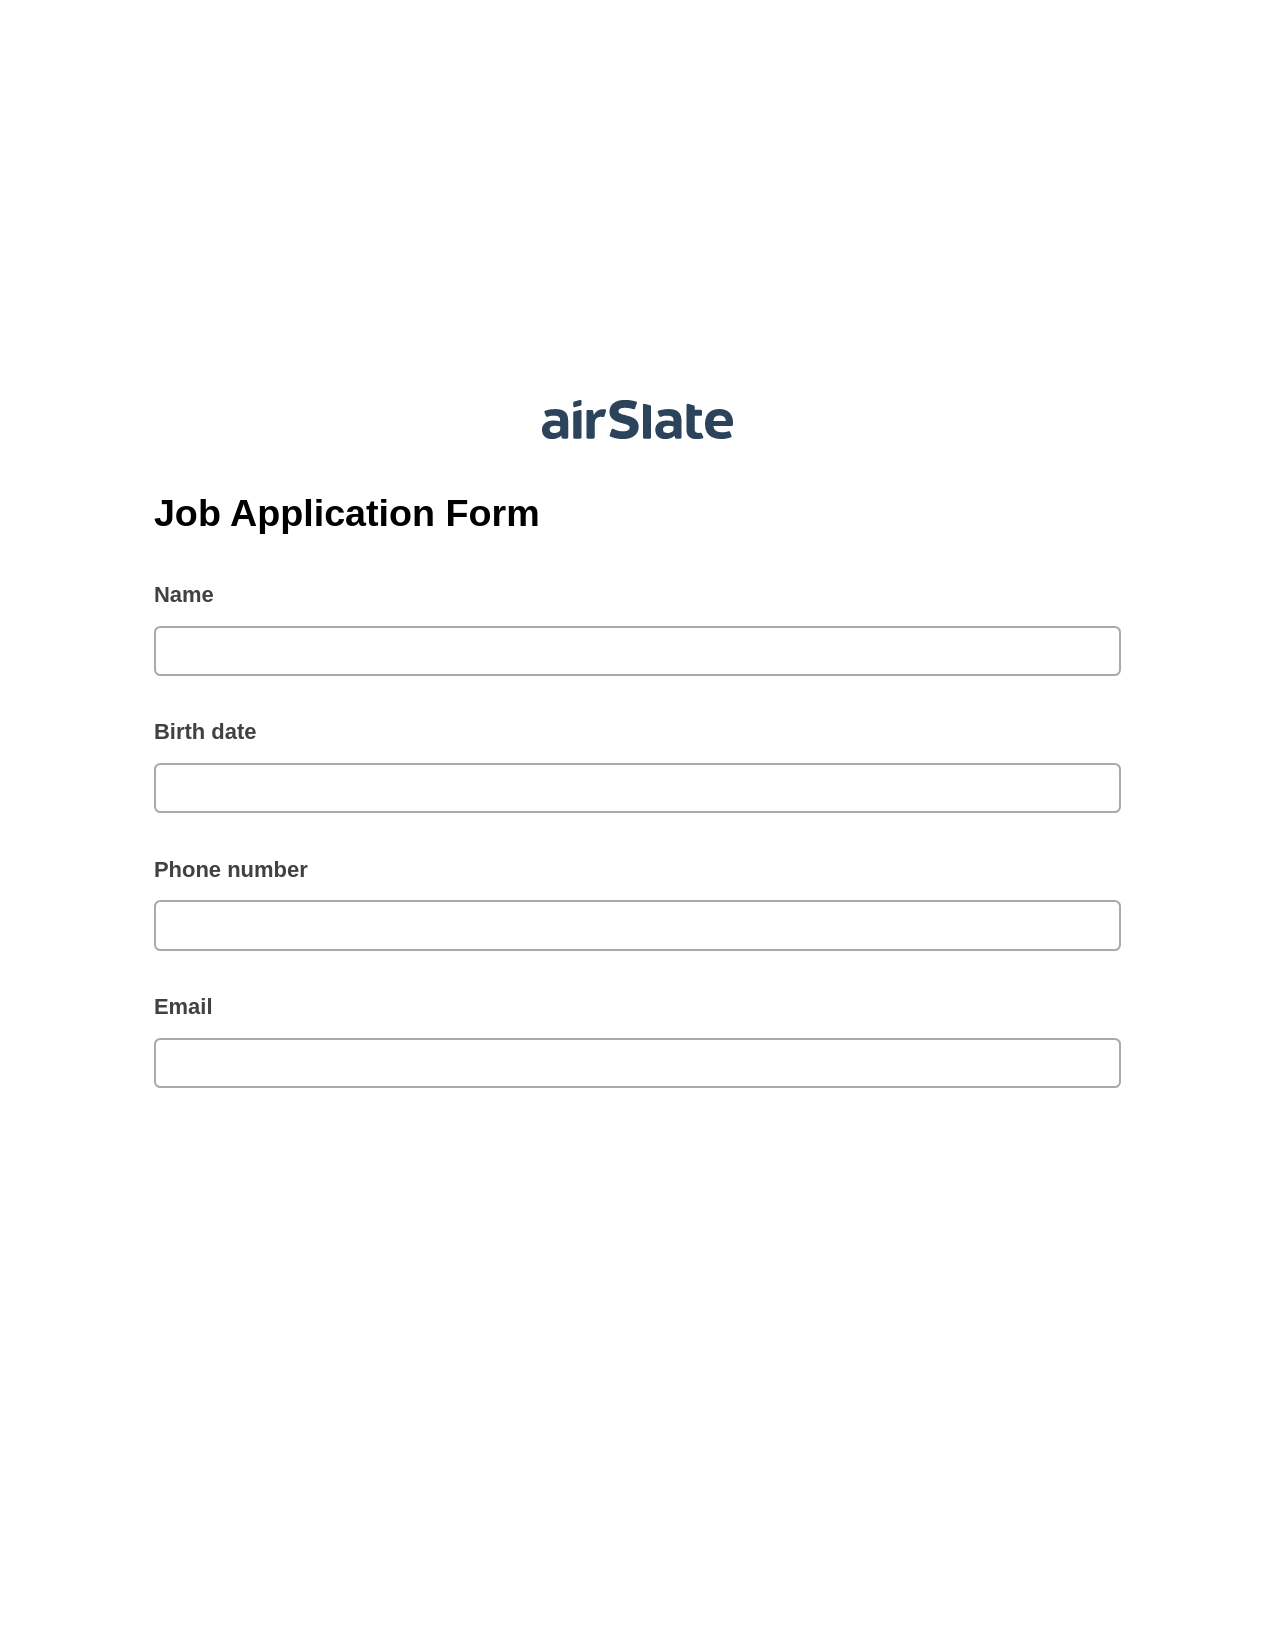 Multirole Job Application Form Pre-fill Dropdowns from Smartsheet Bot, Update NetSuite Records Bot, Google Drive Bot